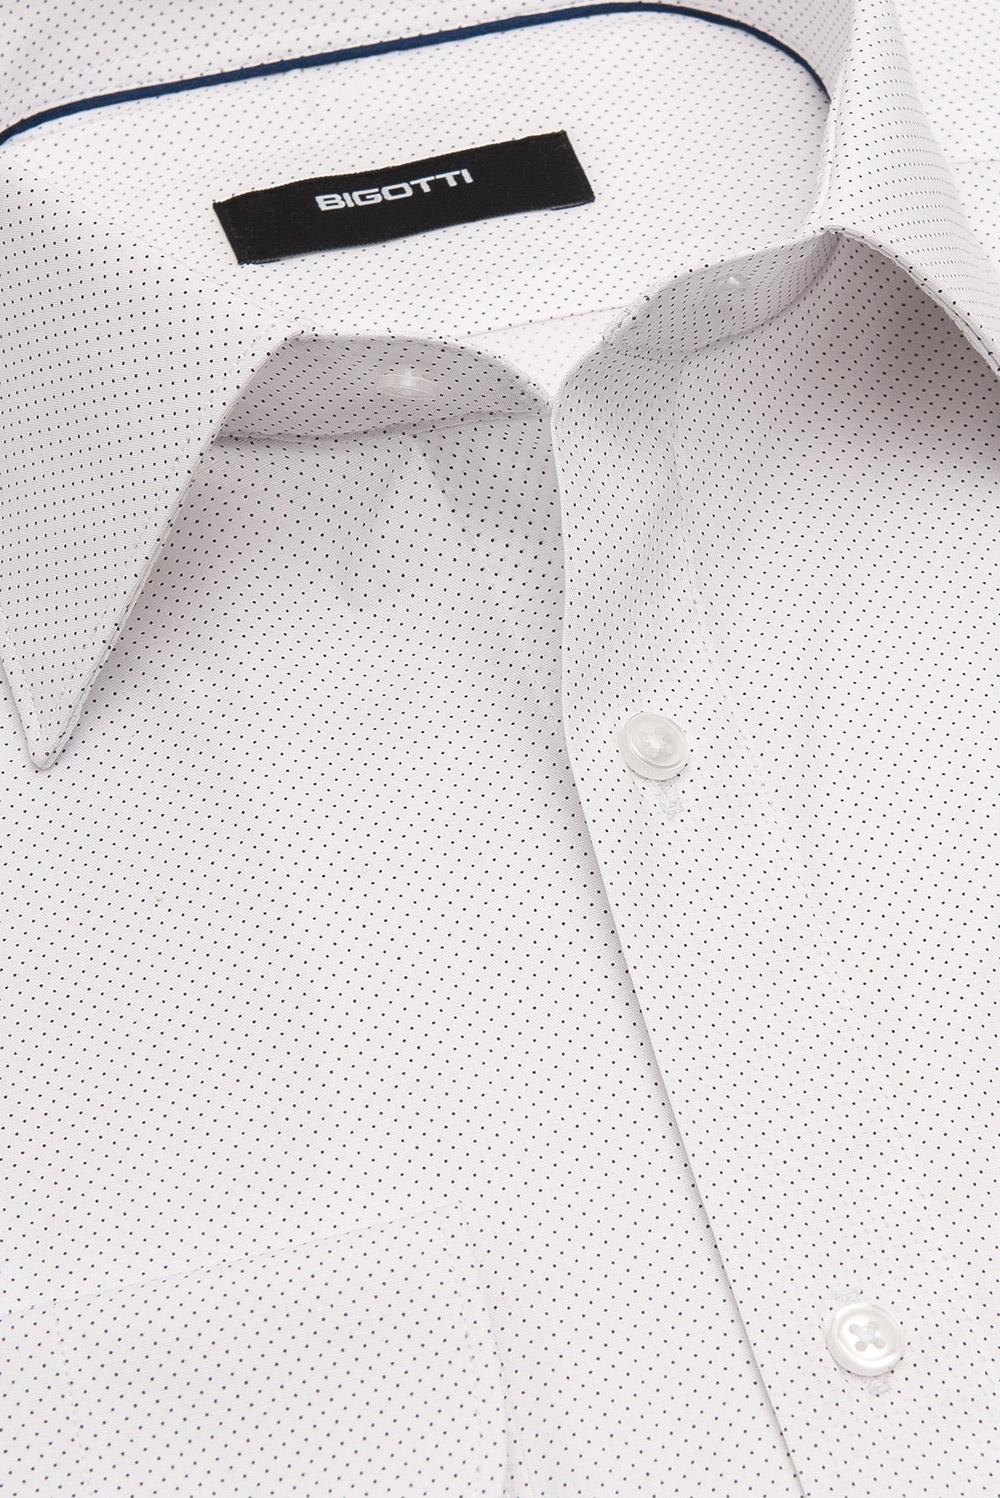 Shaped white geometric shirt 1